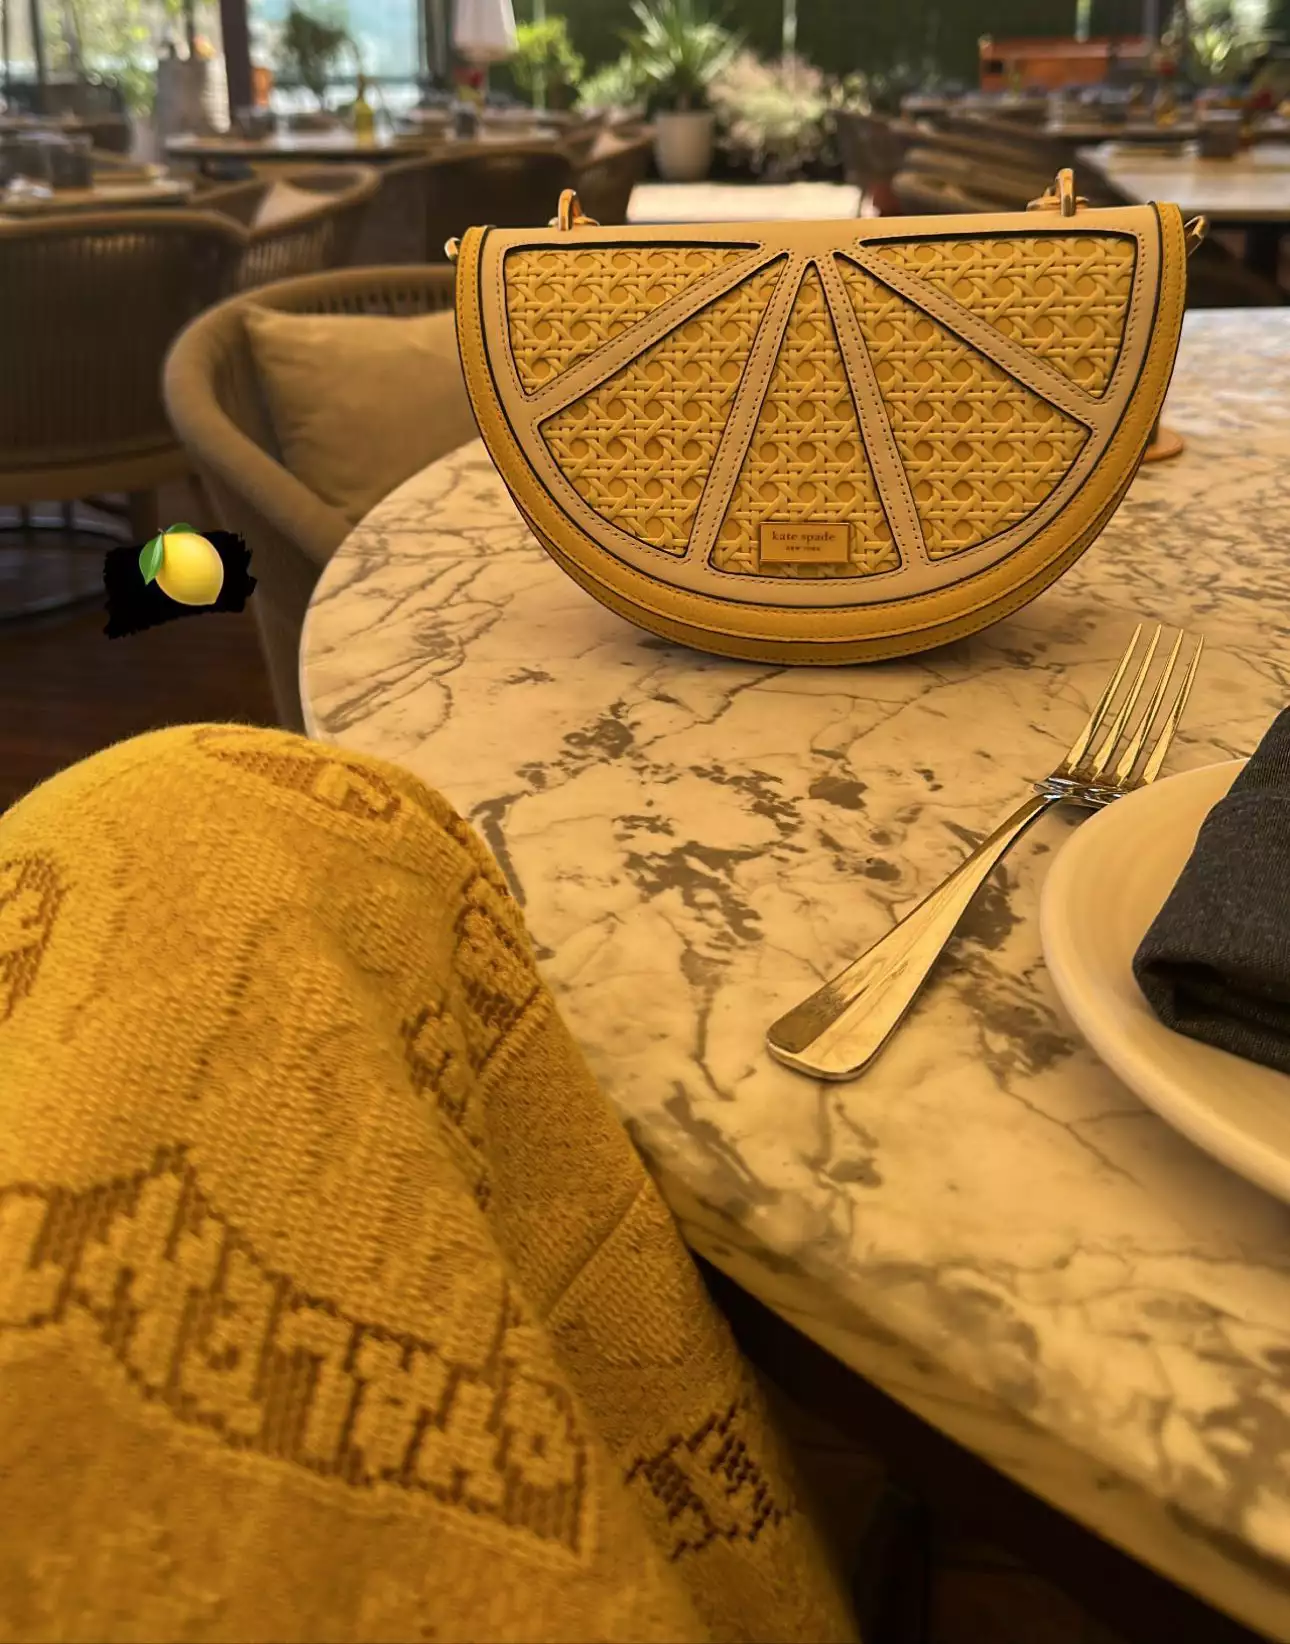 Selena Gomez Wears Chic Yellow Dress and Citrus-Style Handbag to Beauty Launch instagram 08 15 23